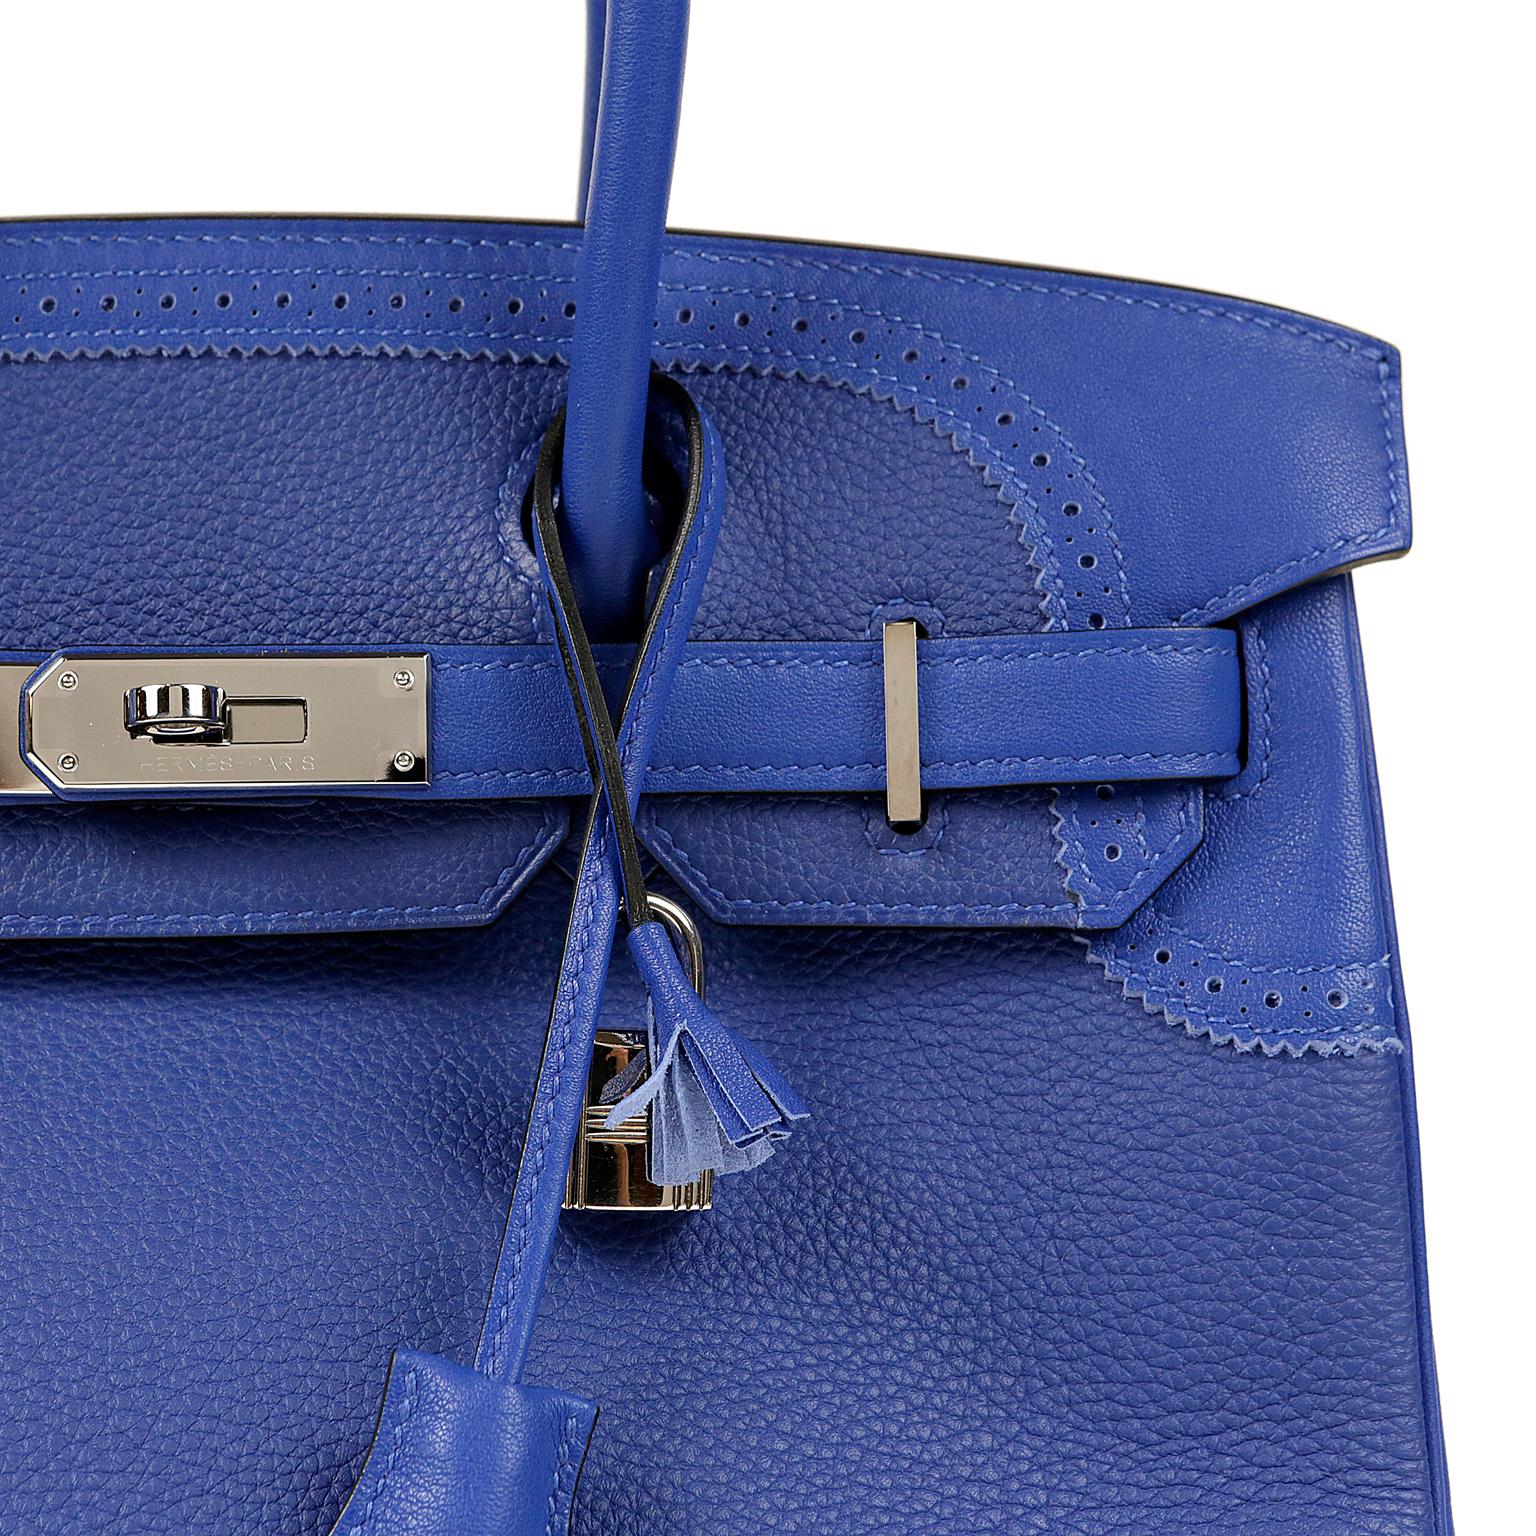 Hermès Blue Electrique Togo 30 cm Ghillies Birkin Bag 7